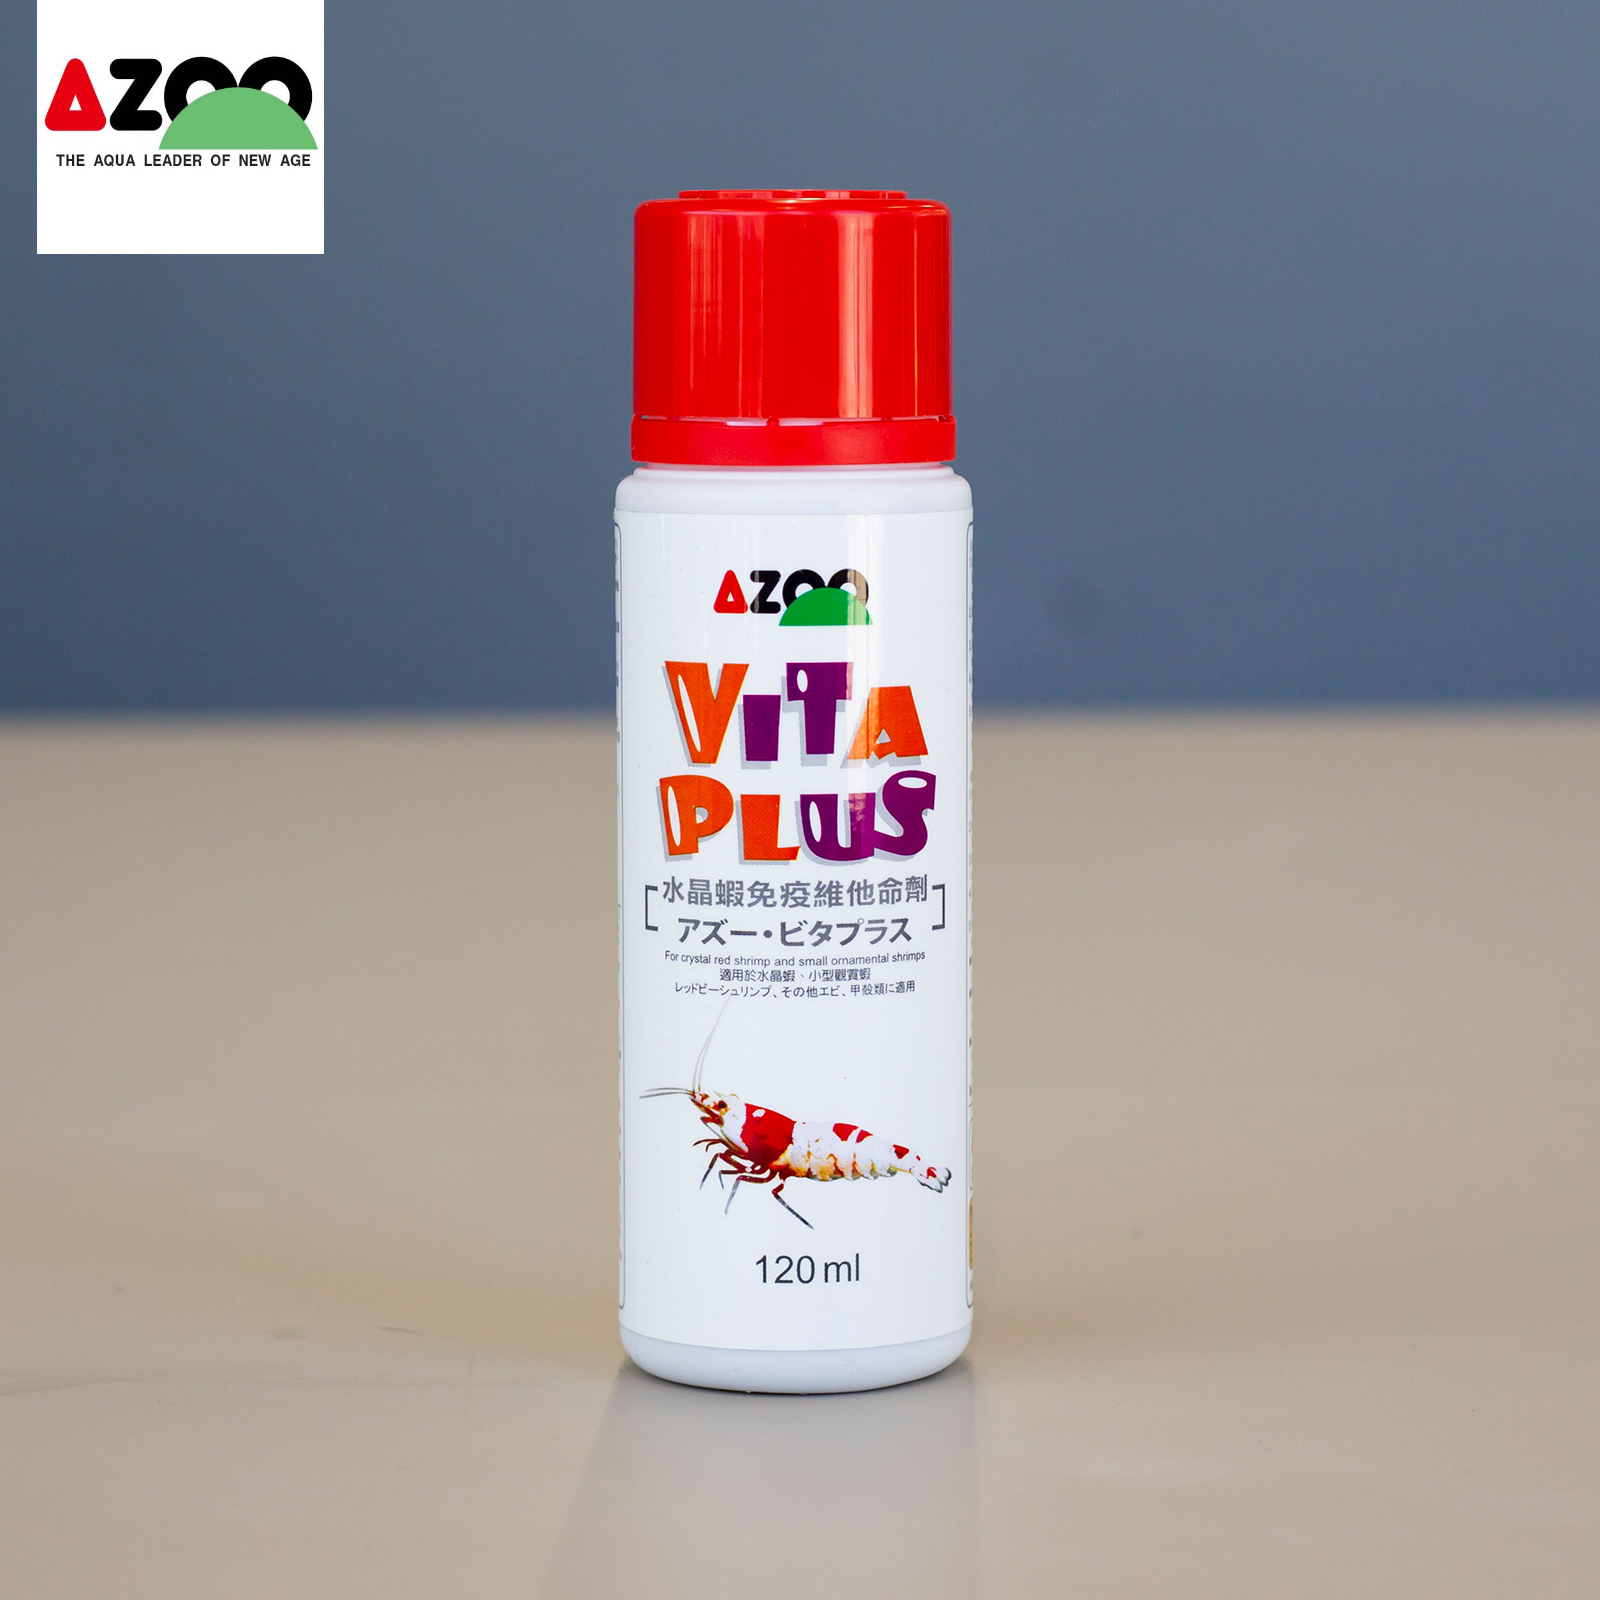 AZOO Vita Plus 120ml